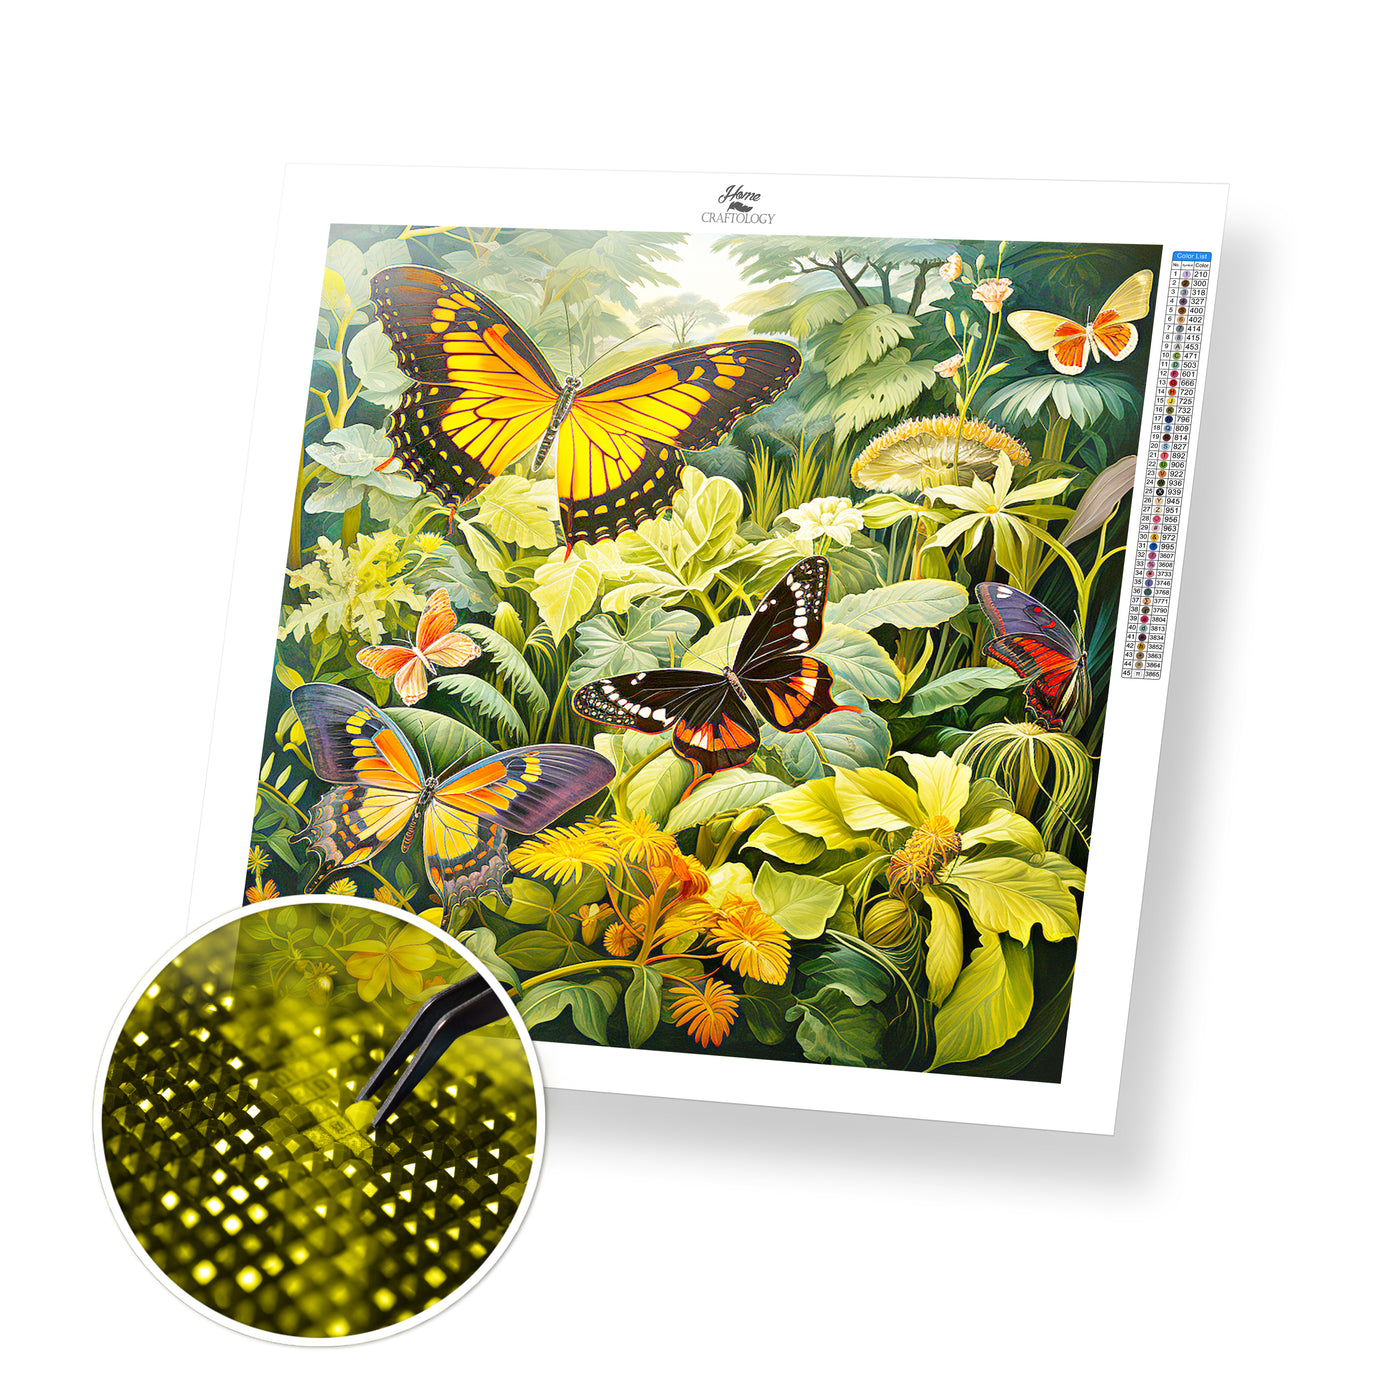 New! Greens and Butterflies - Premium Diamond Painting Kit